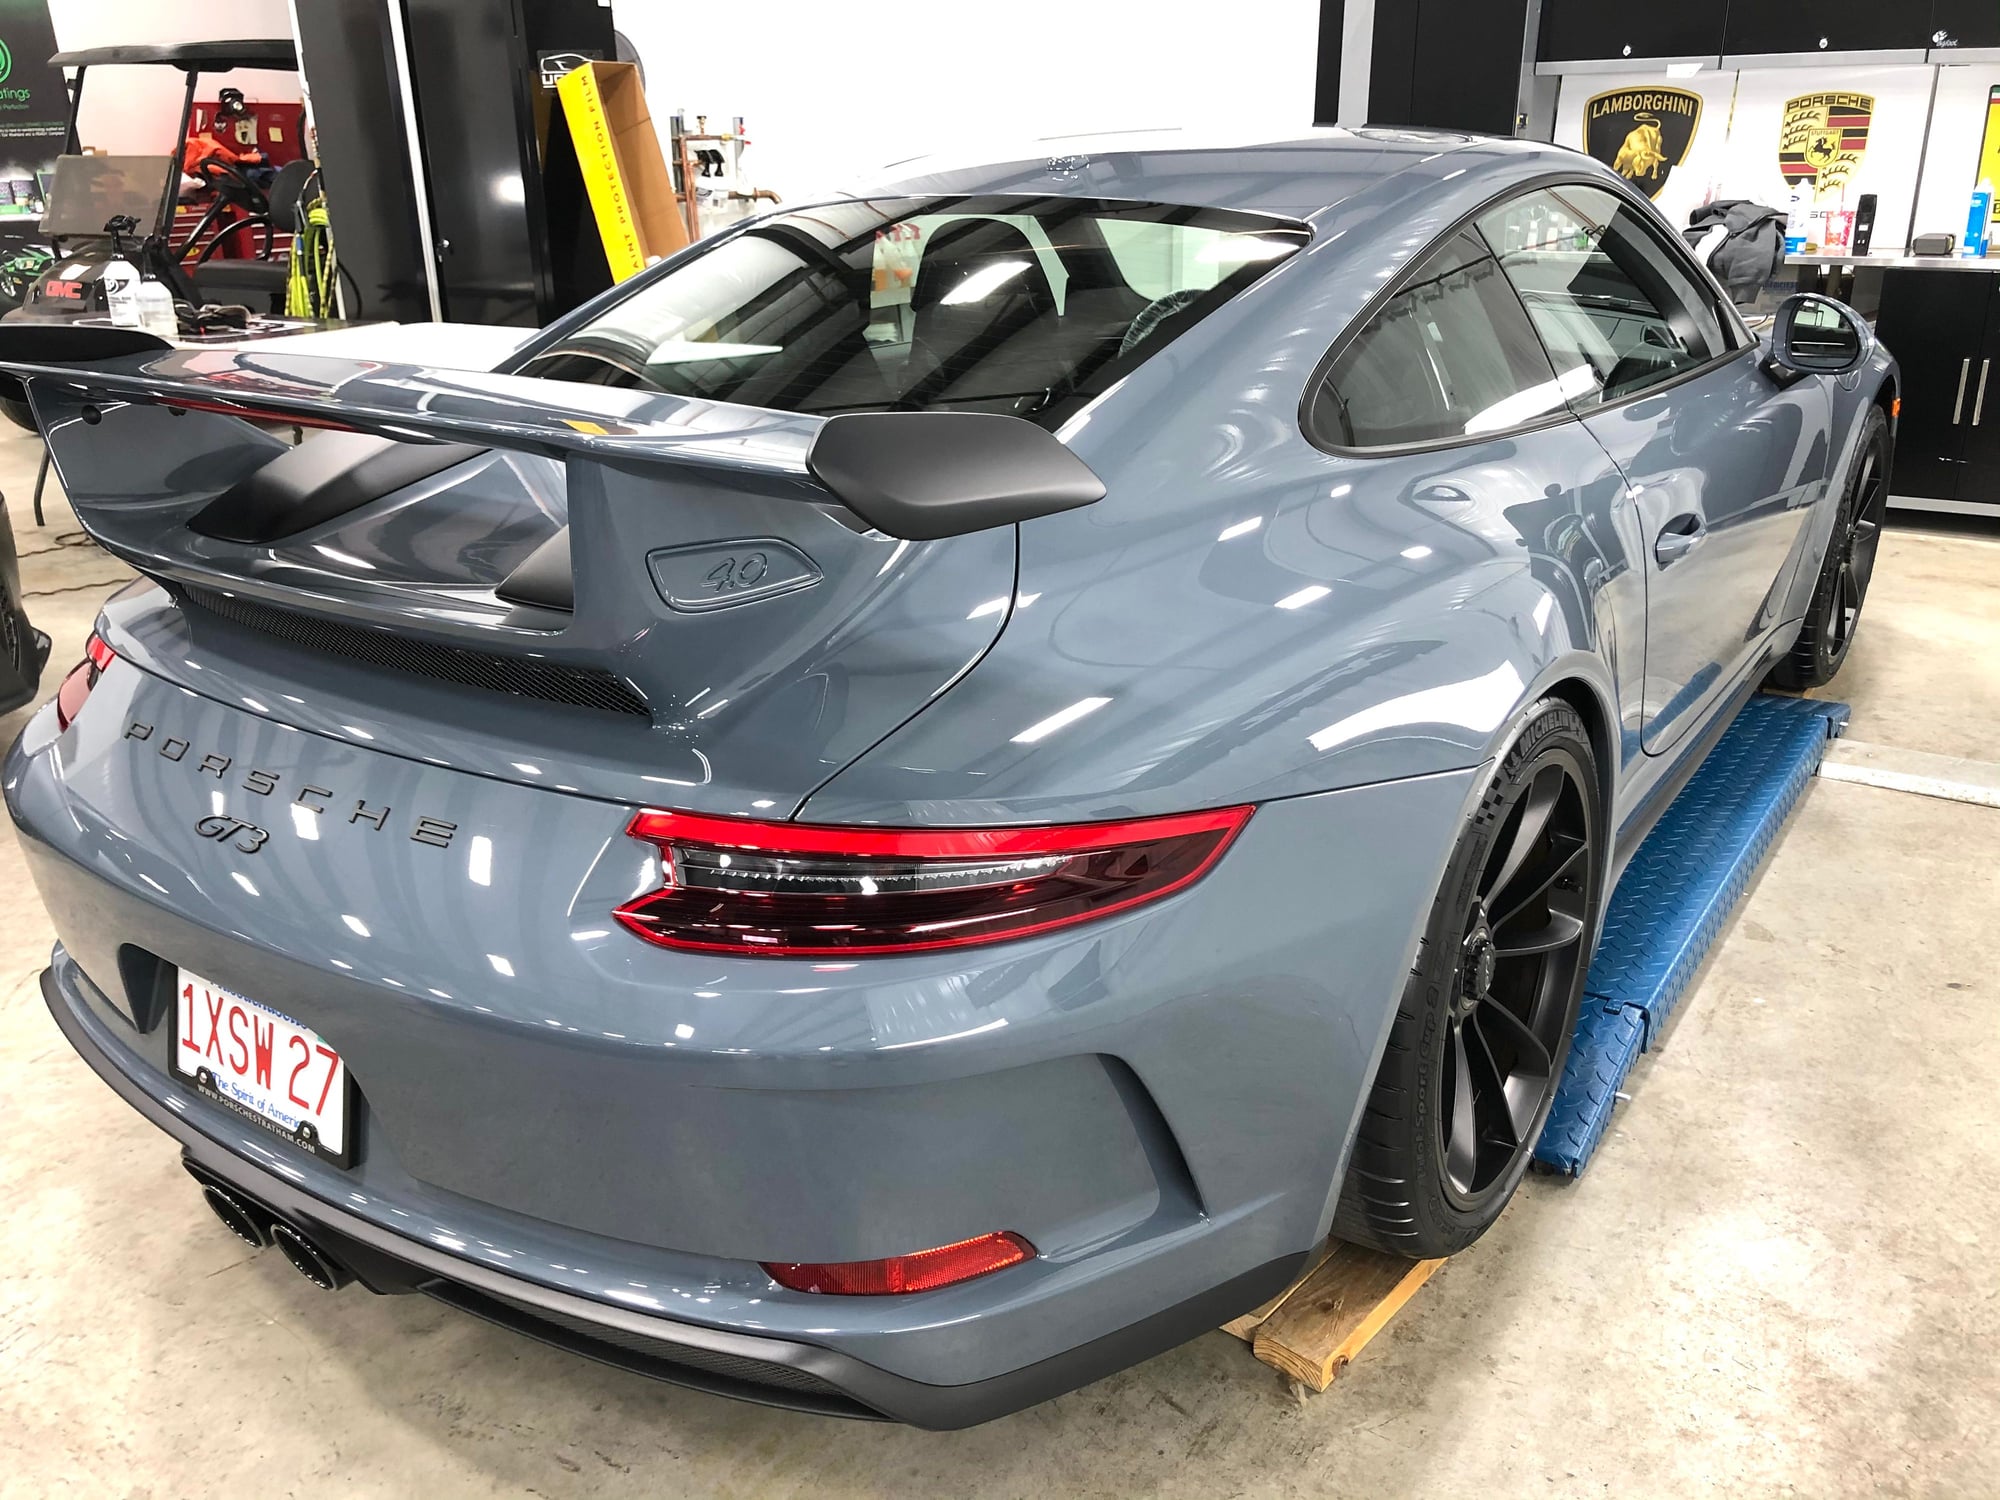 2018 Porsche GT3 - 2018 991.2 GT3 manual - Used - VIN WP0AC2A9XJS174426 - 4,300 Miles - Manual - Newbury, MA 01951, United States